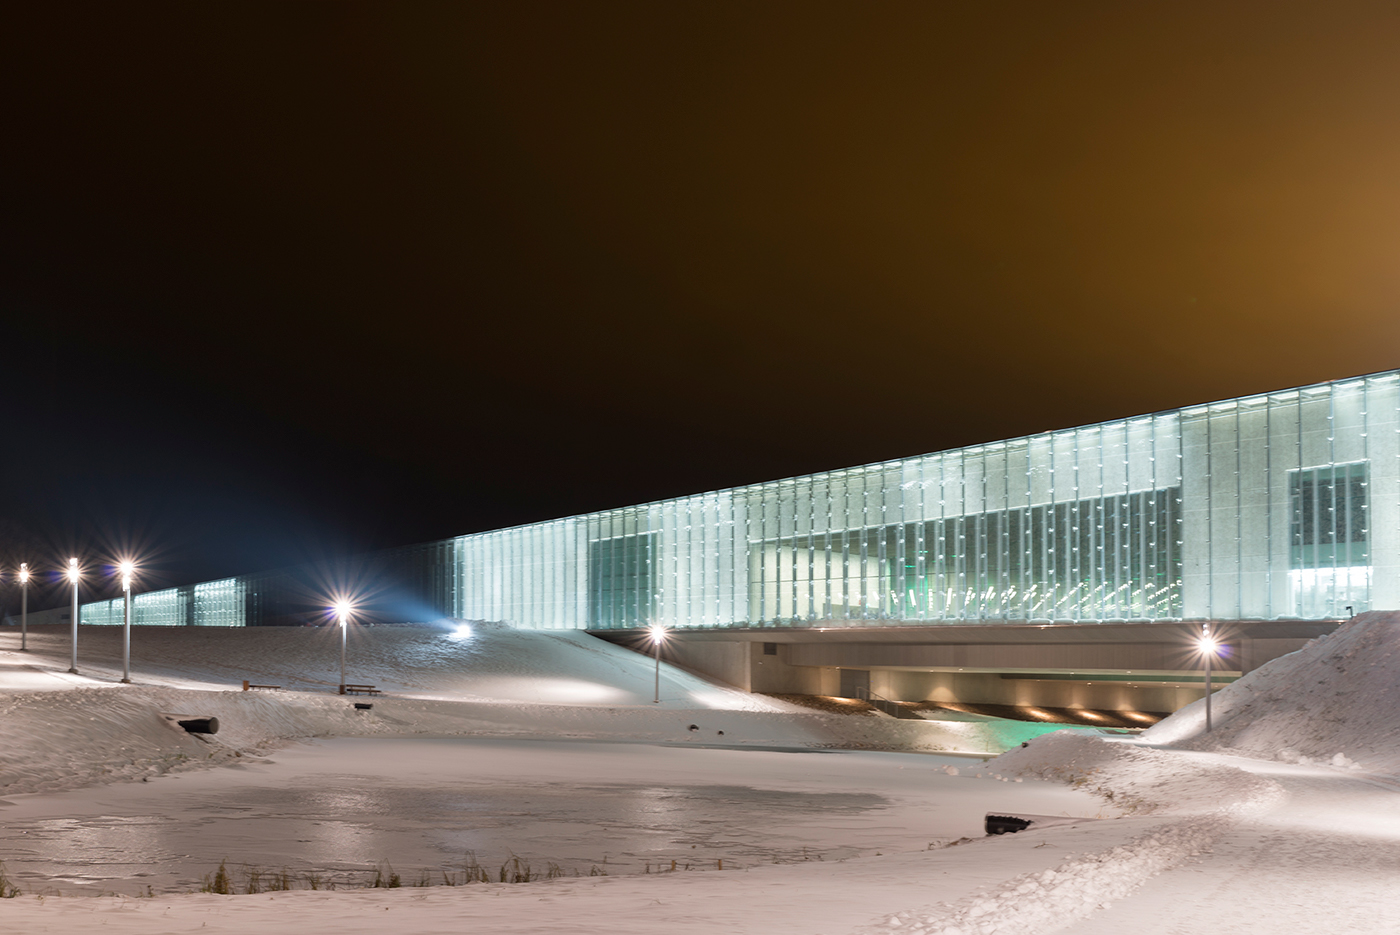 Estonia museum Tartu modern architecture winter snow modern design